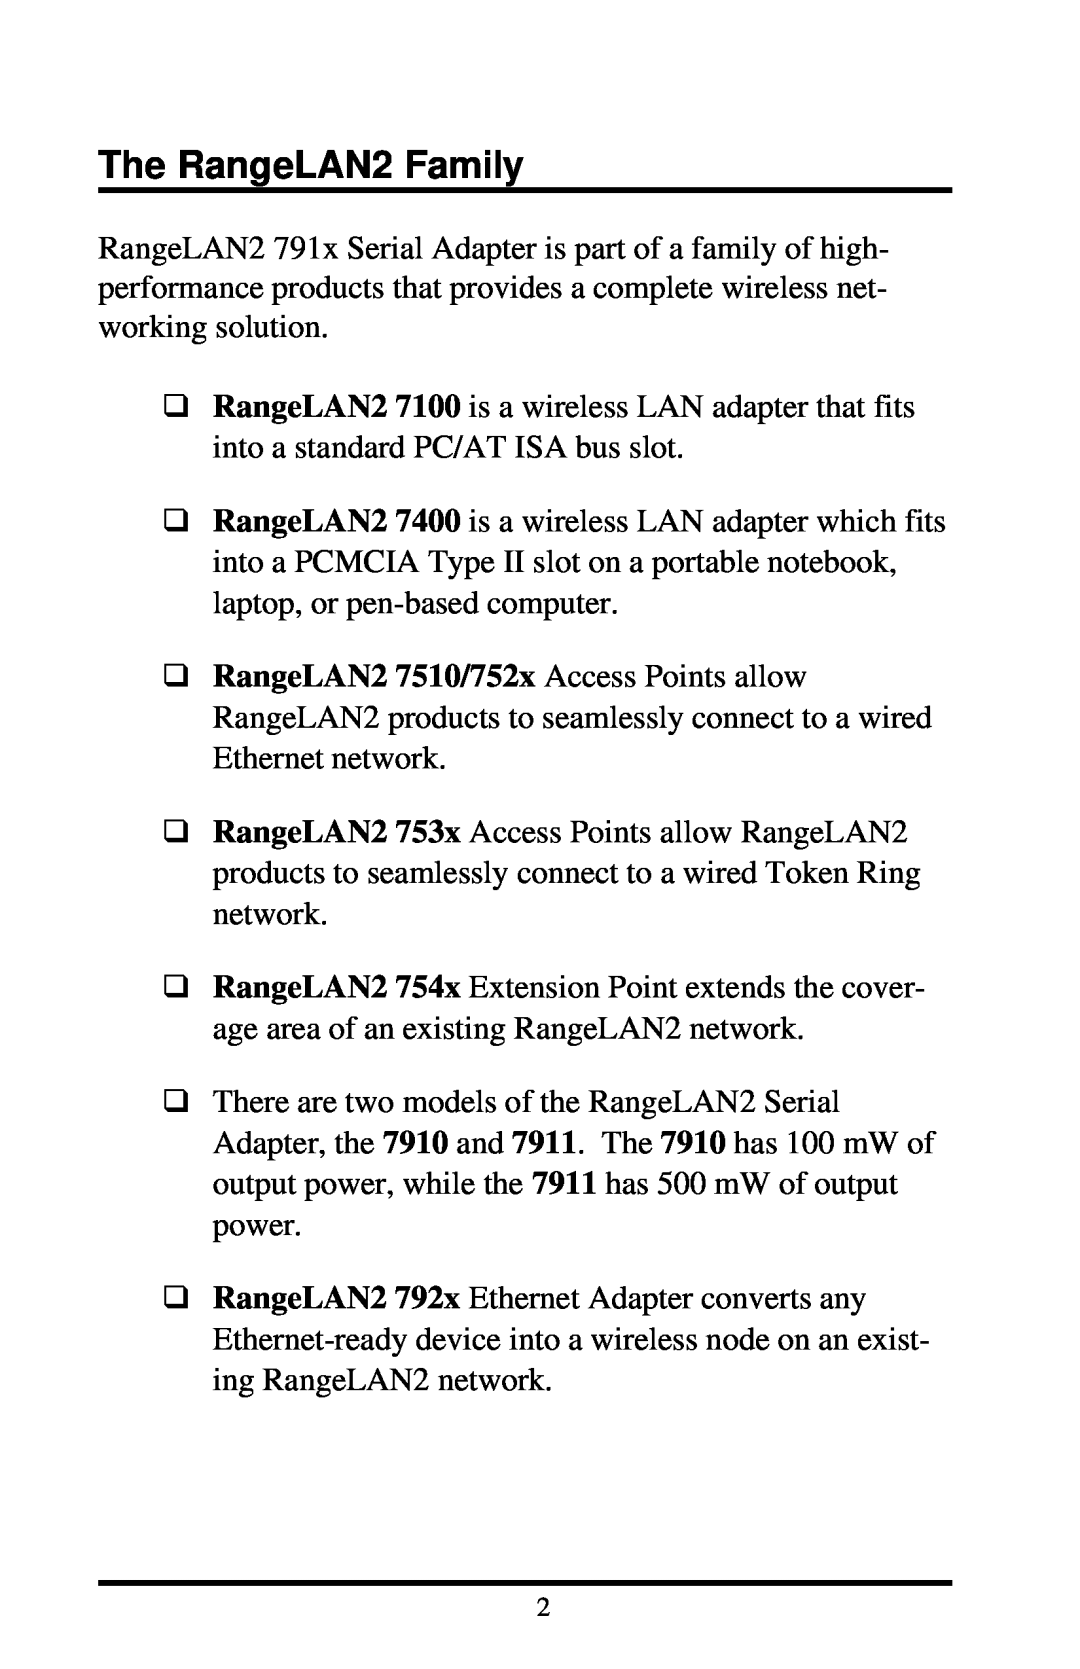 Proxima ASA 7910, 7911 manual The RangeLAN2 Family 